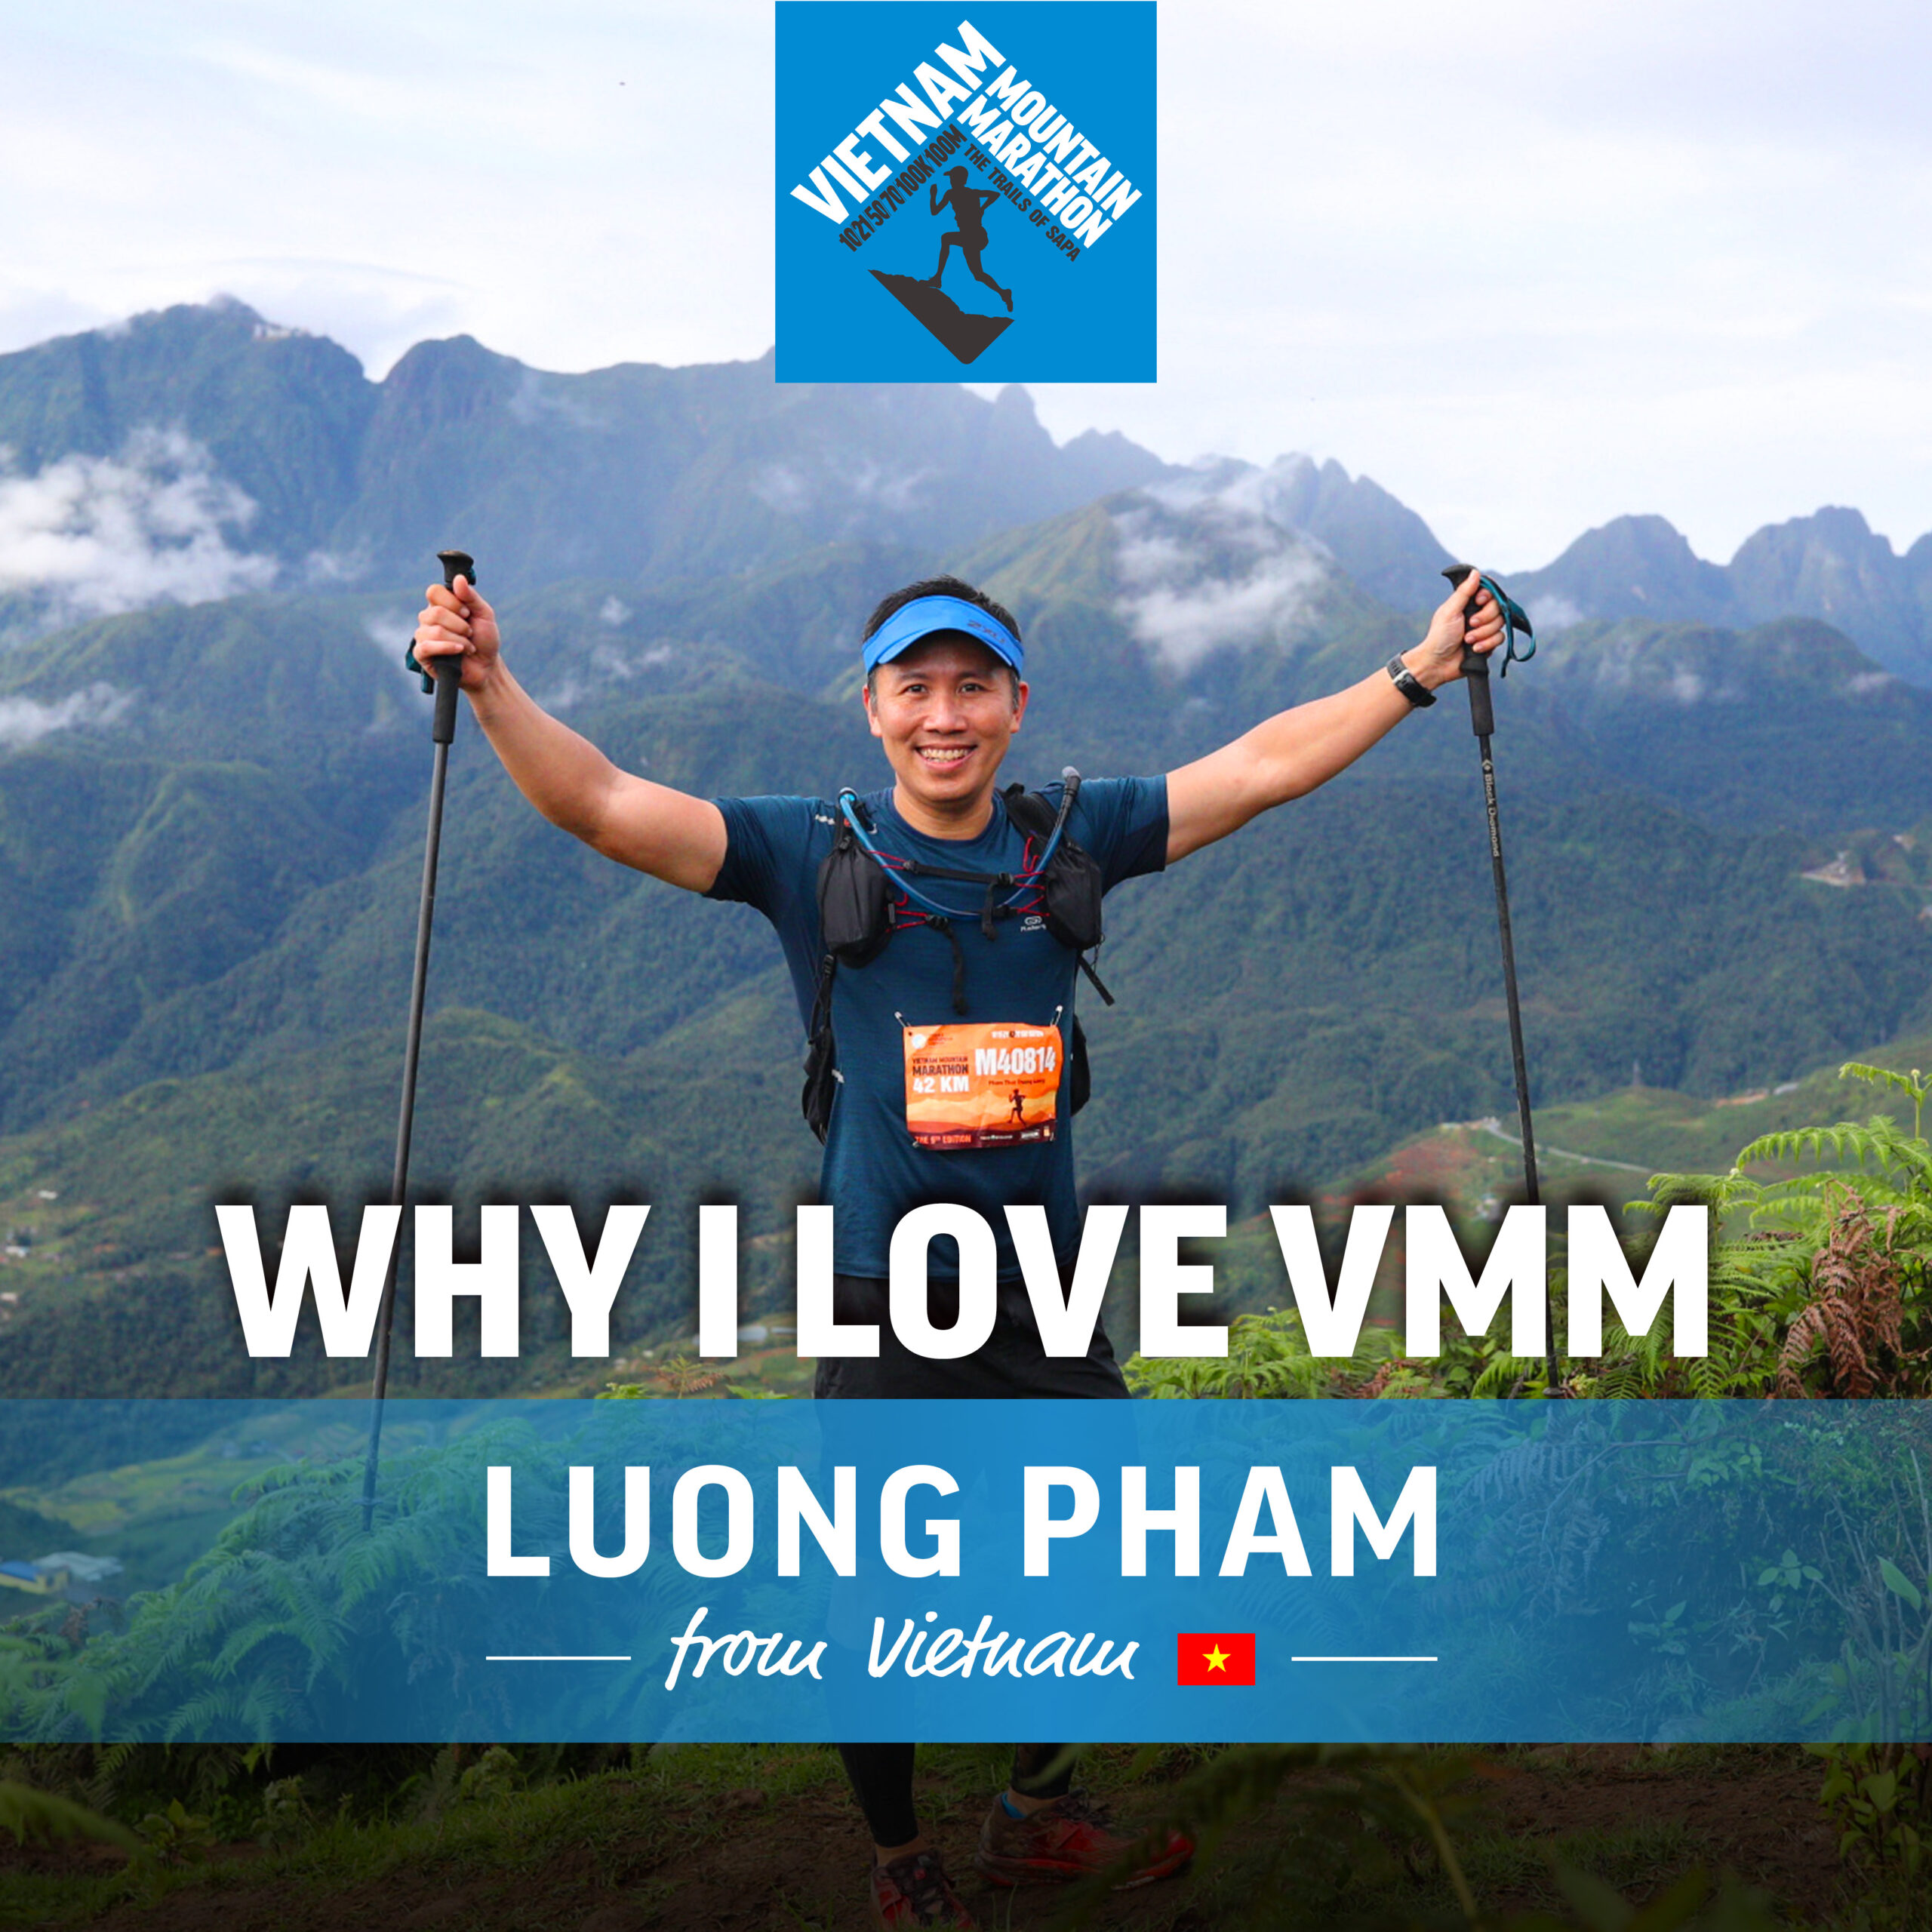 why i love vmm - luong pham